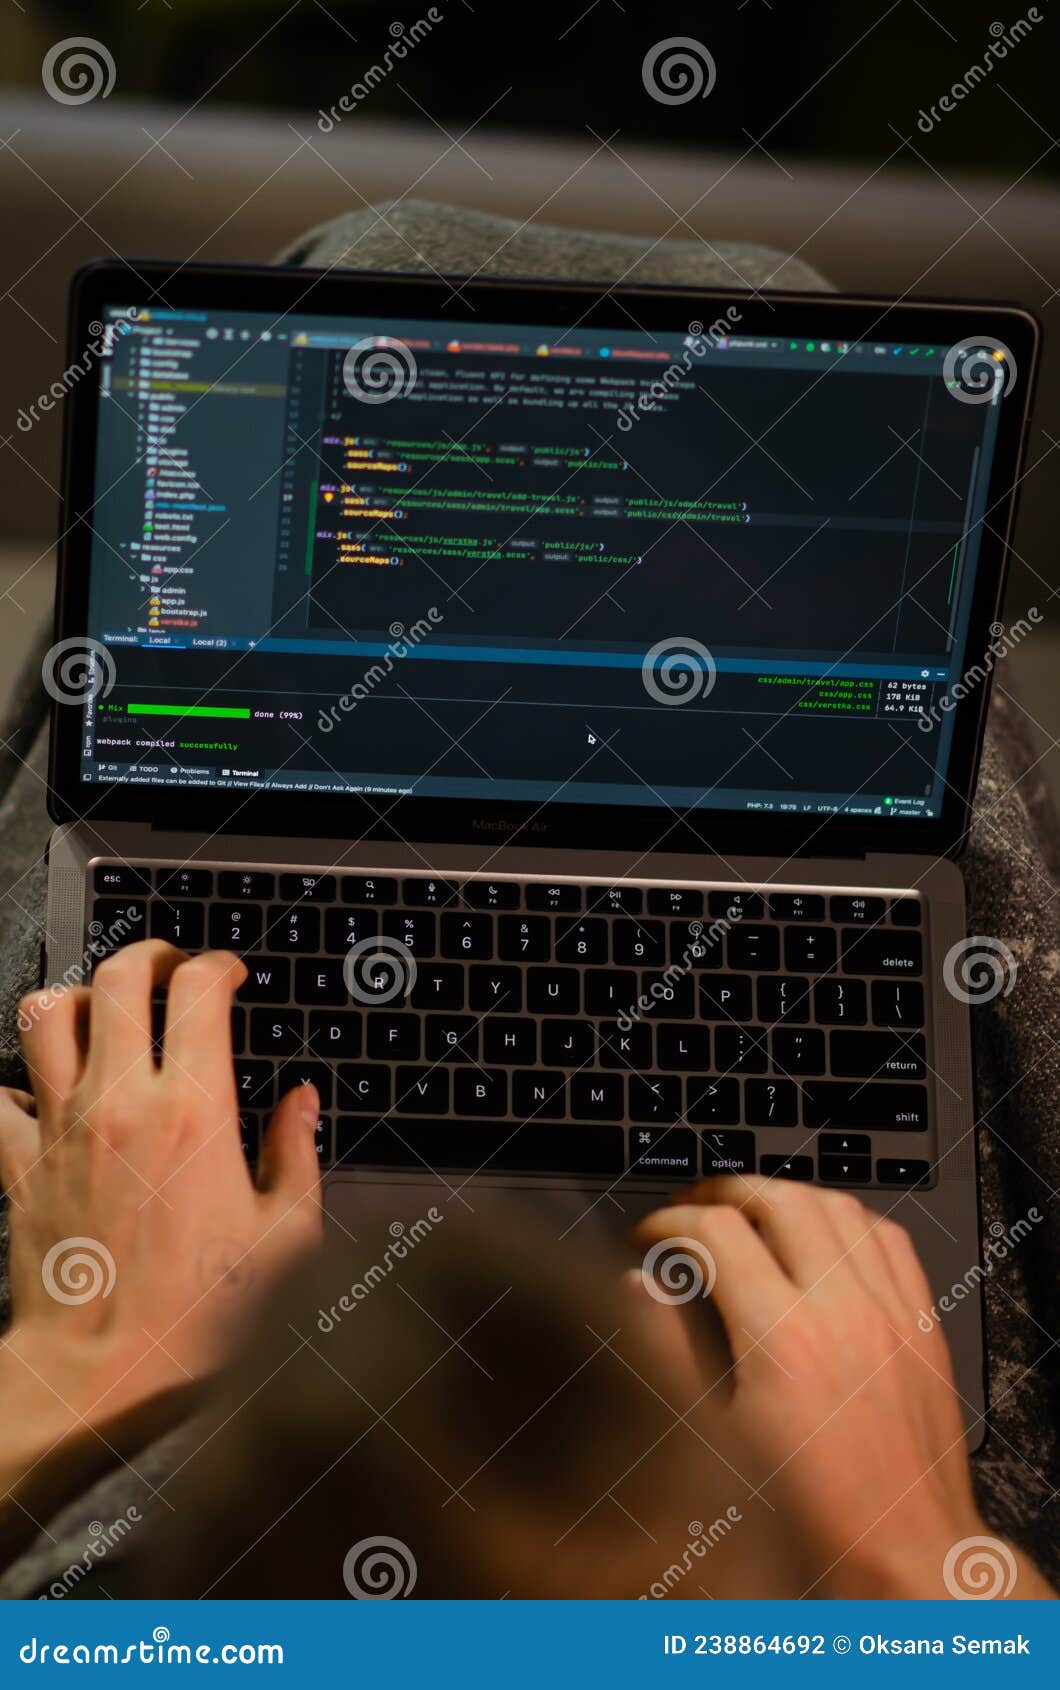 macbook, computer, laptop, technology, programming, coding, code